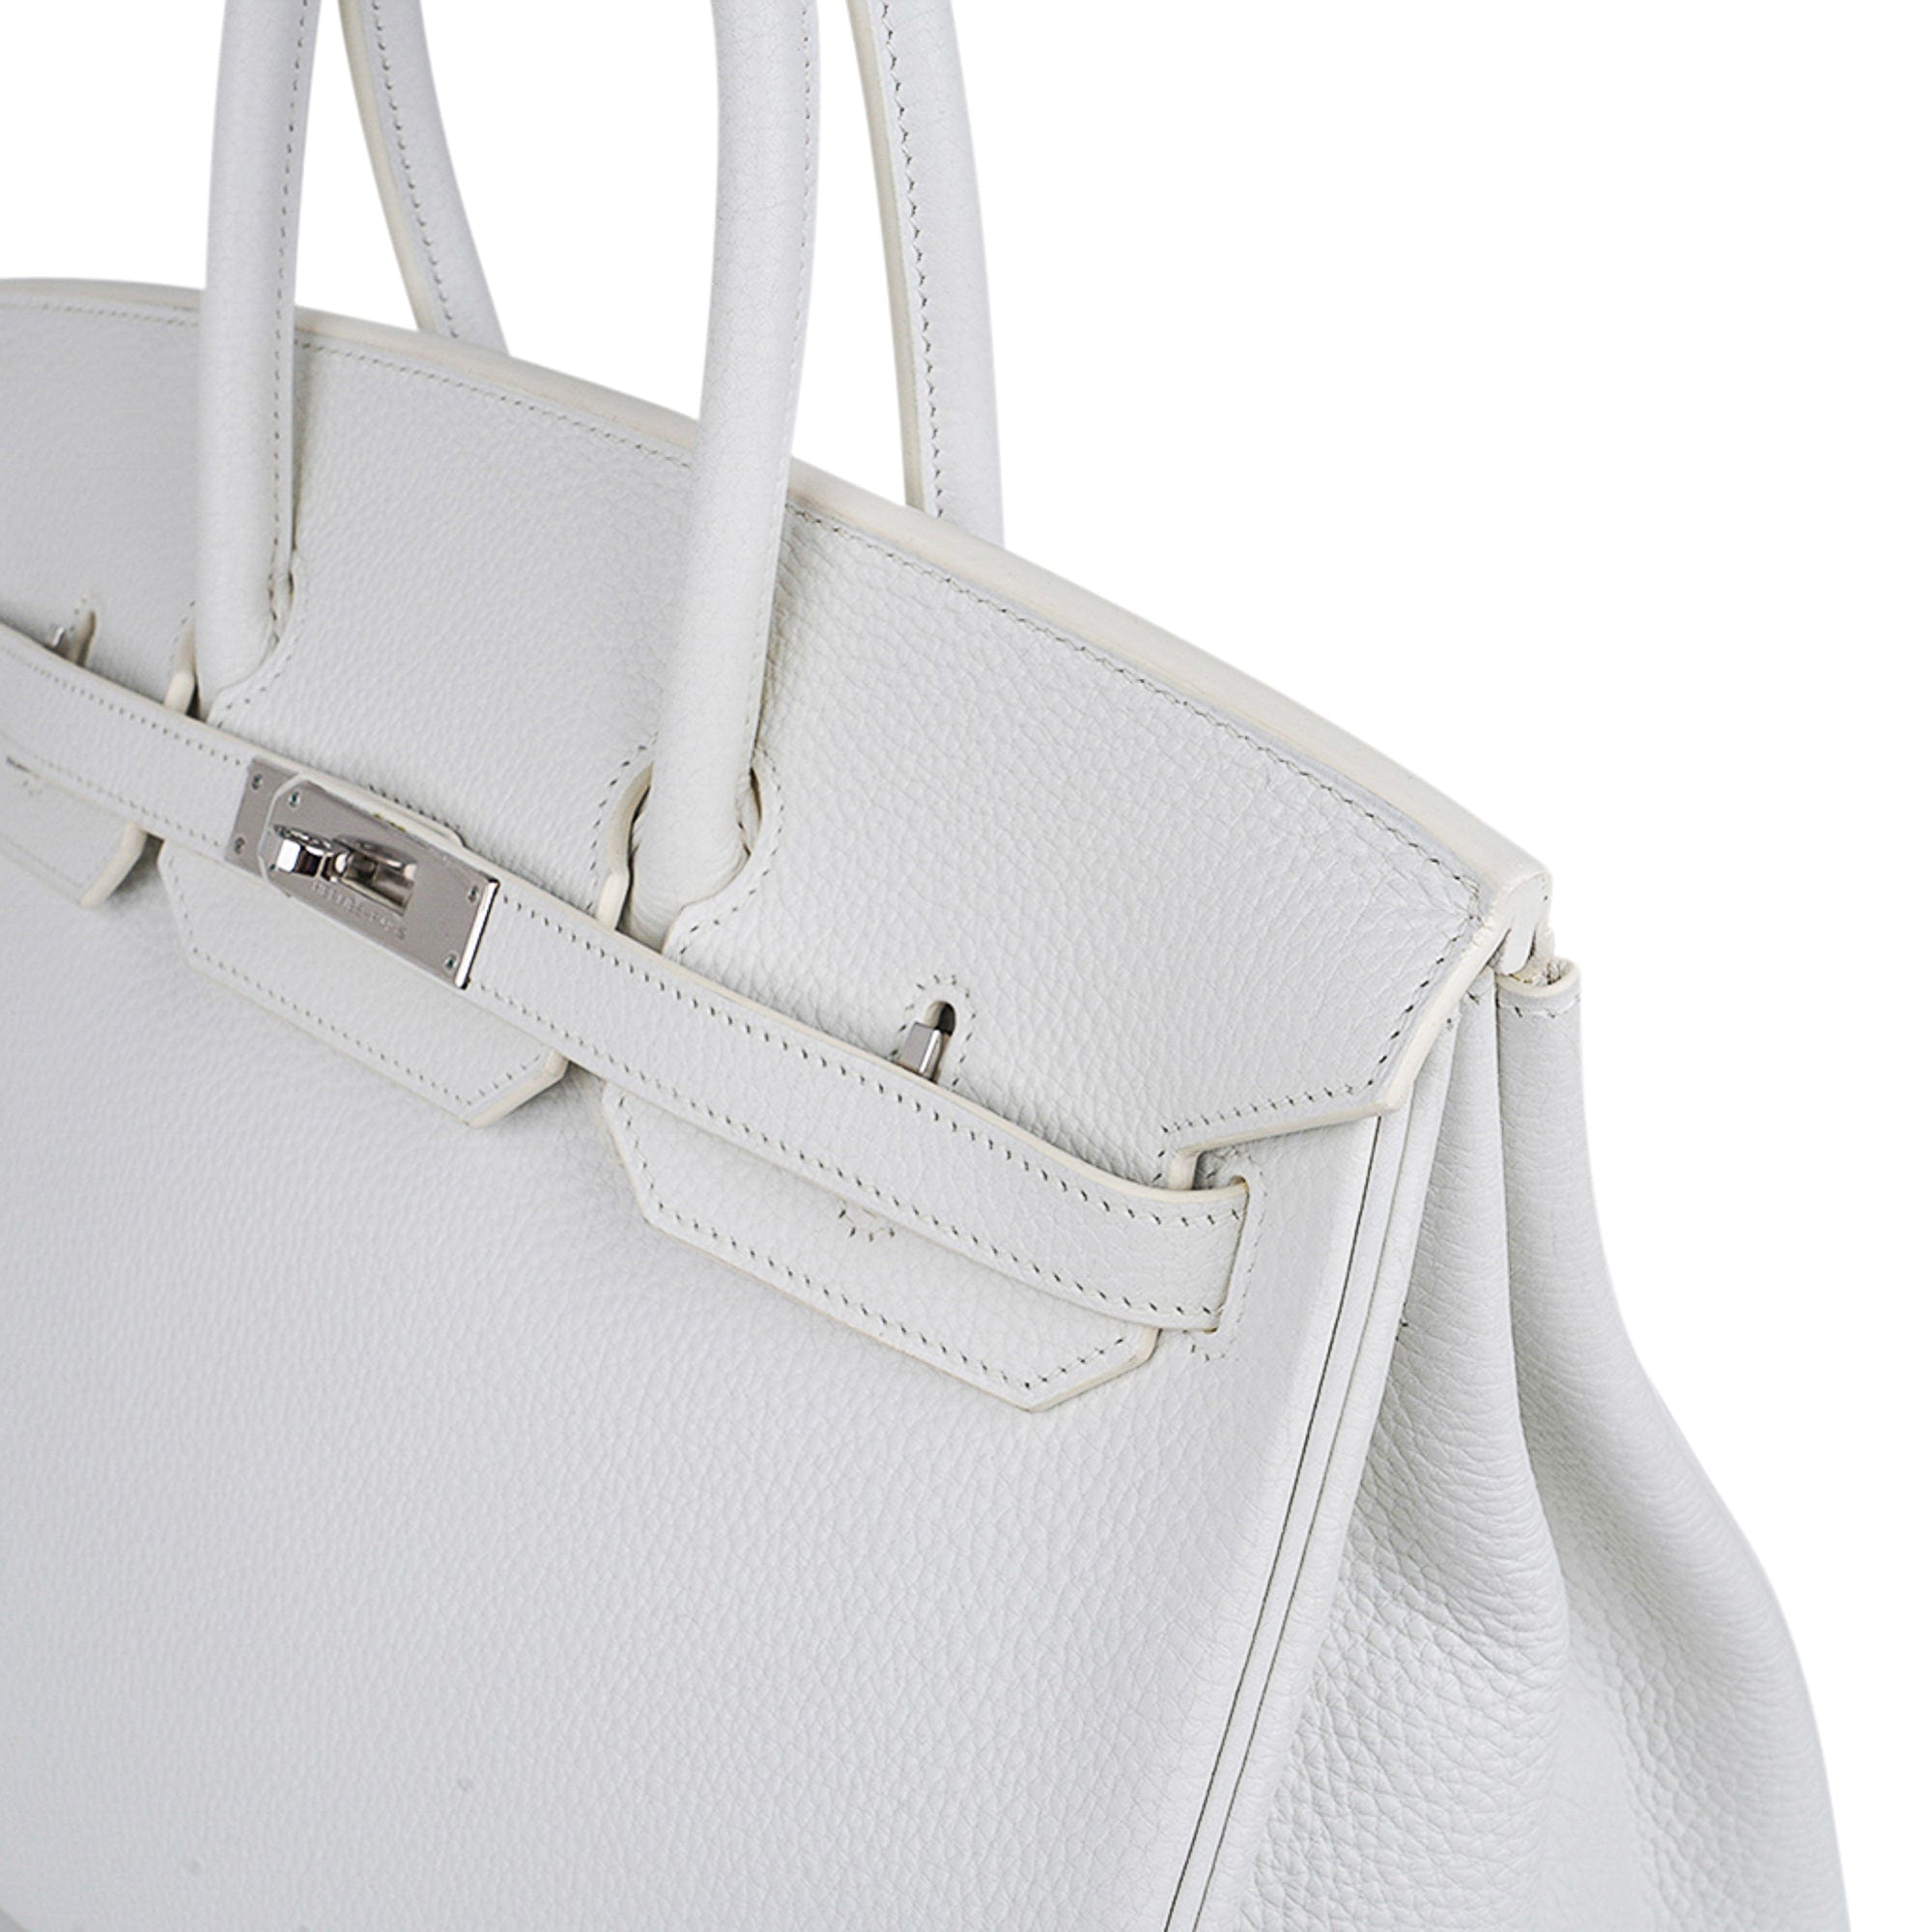 Authentic Hermes Birkin 35 White Leather Palladium Hardware Handbag L 118.S  FR